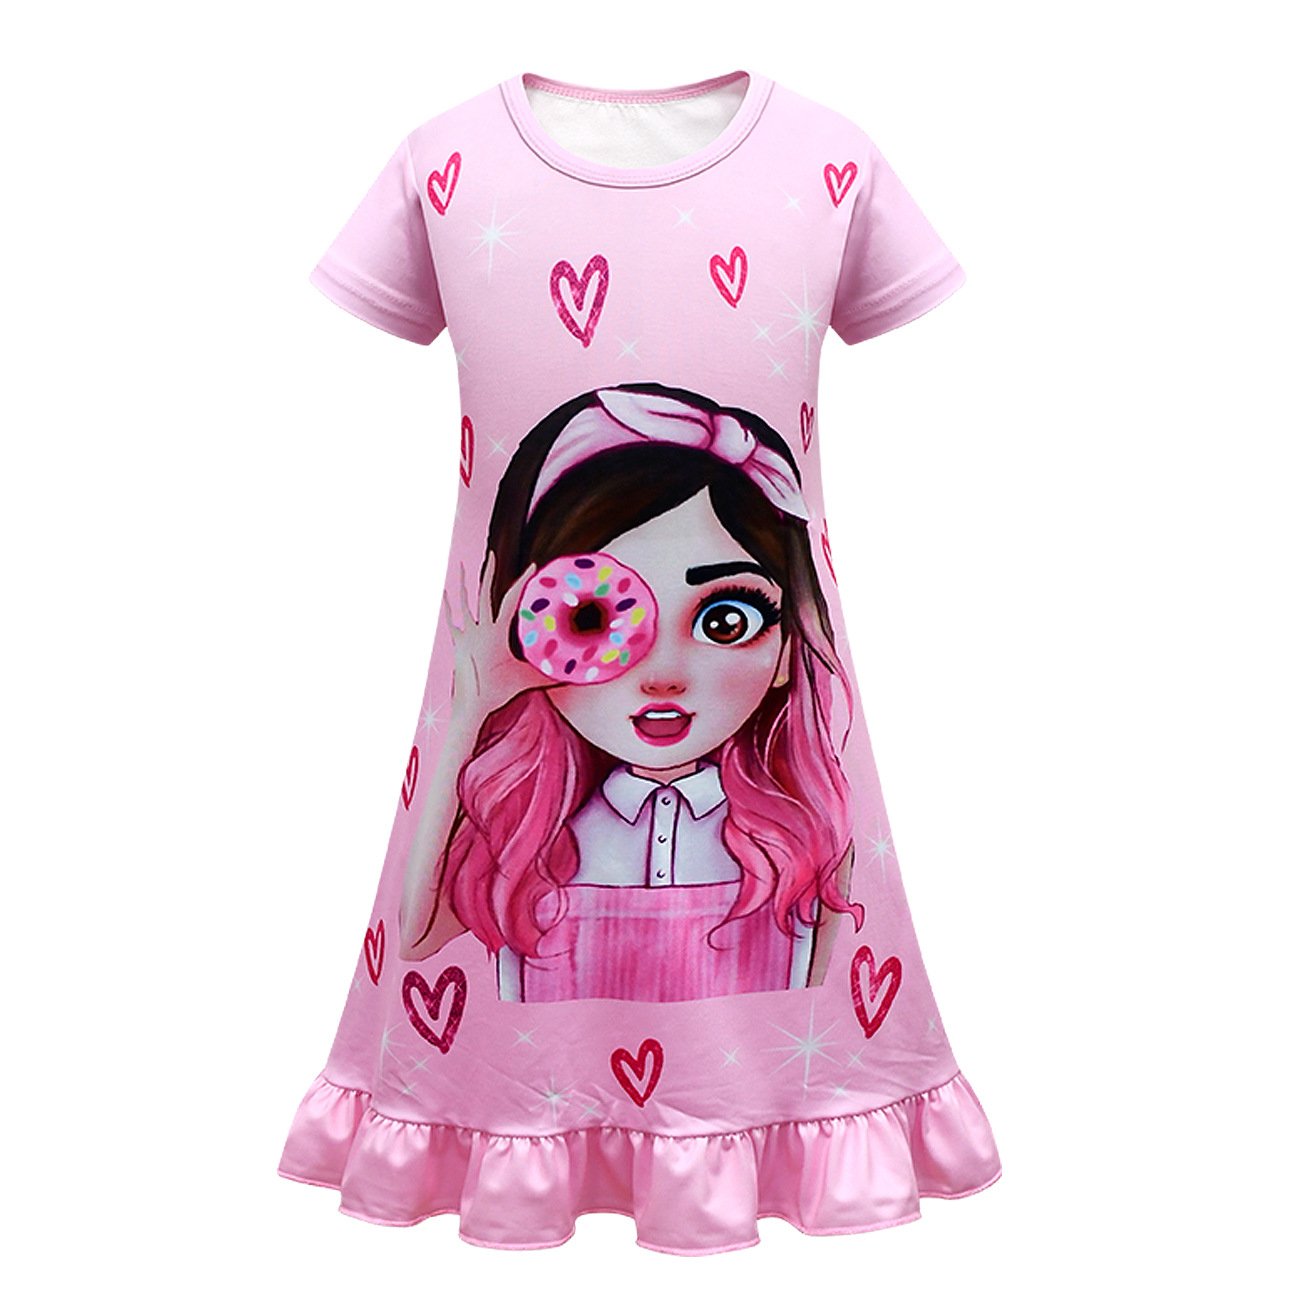 Pink Mis Pastelitos friends Costume Cosplay cartoon print costume Dress For kids